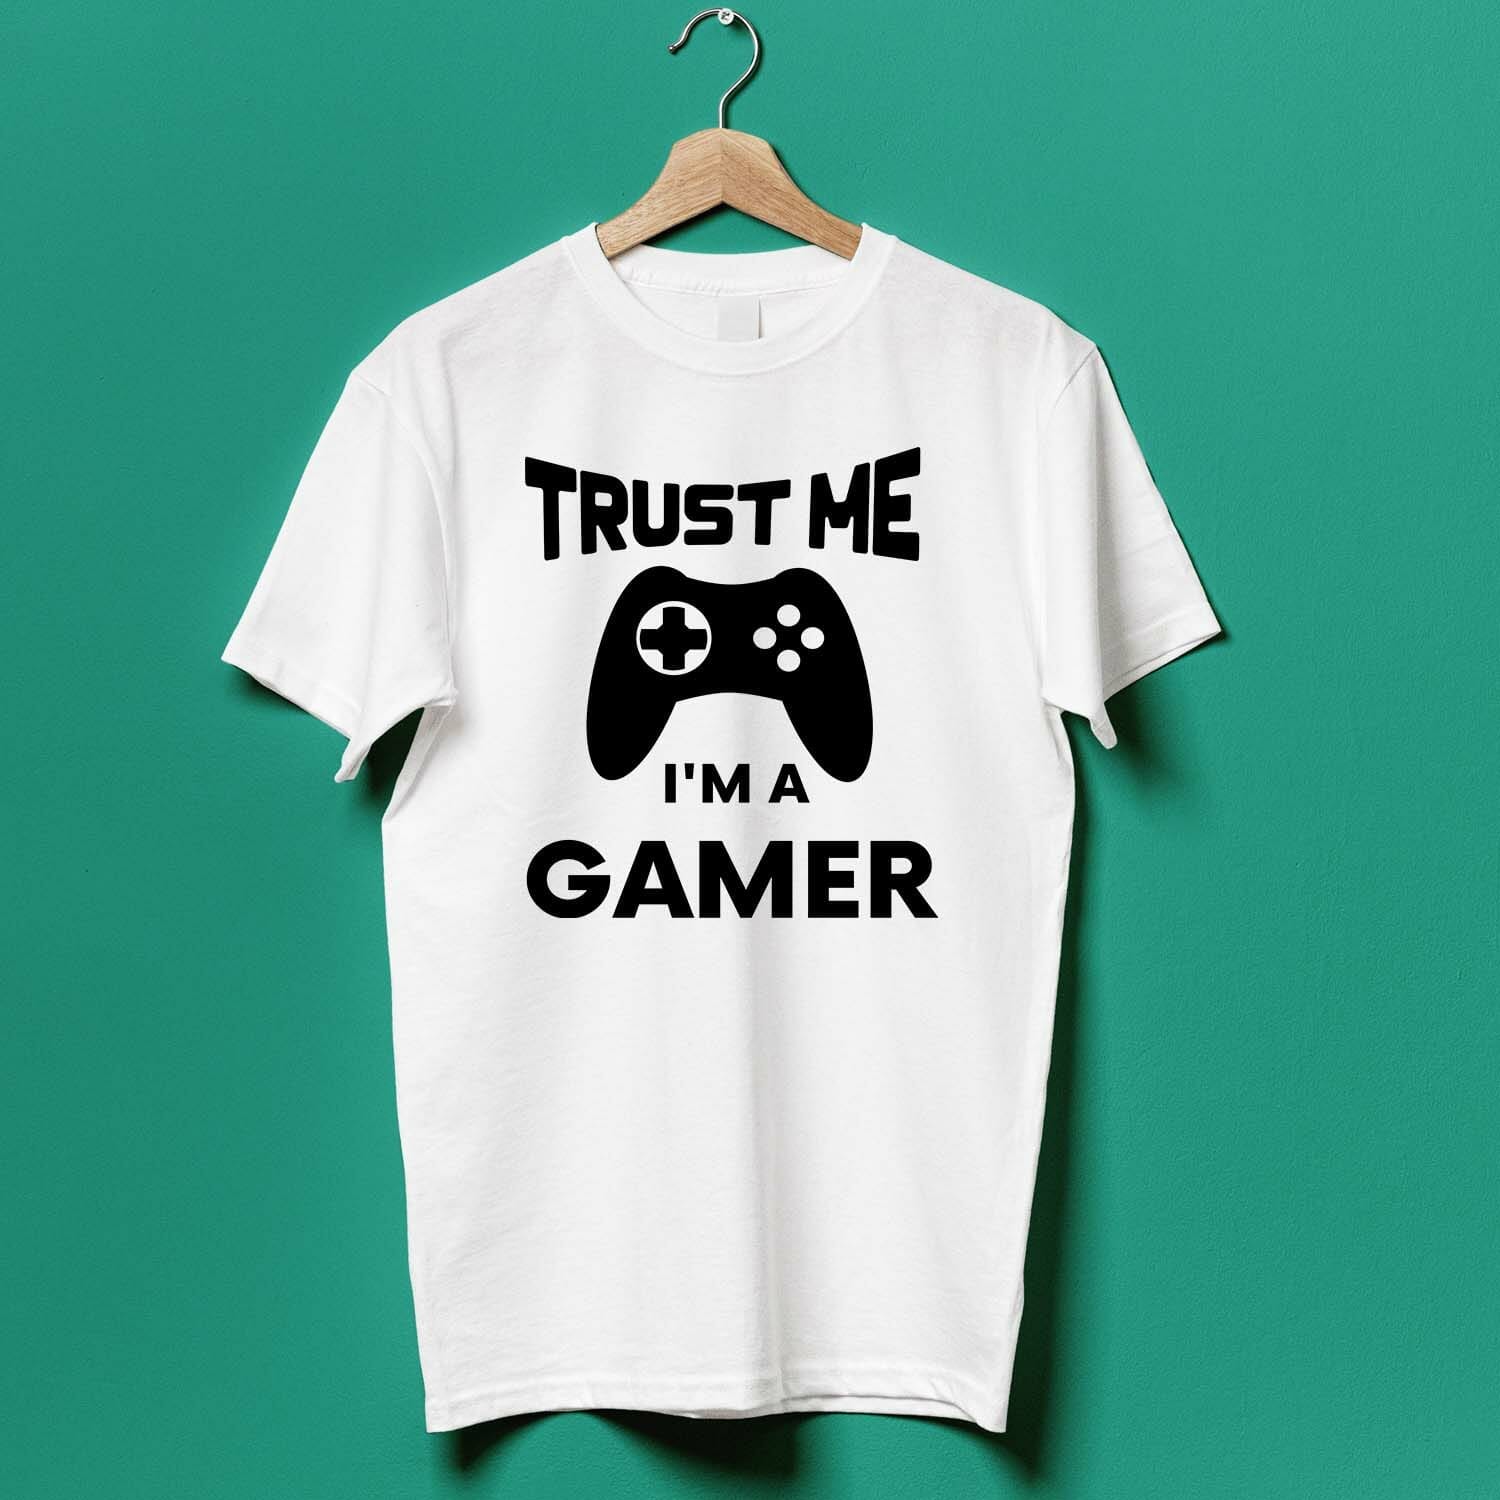 Trust Me I'm a gamer T-shirt Design